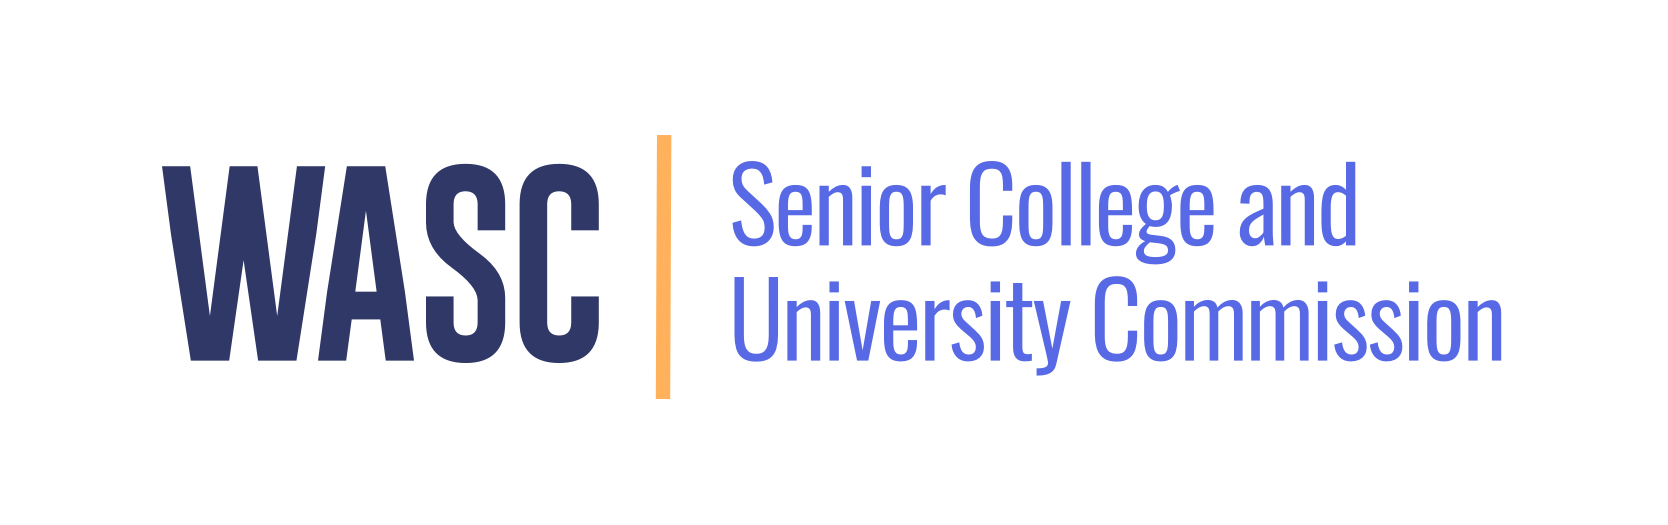 WSCUC Senior College and University Commission